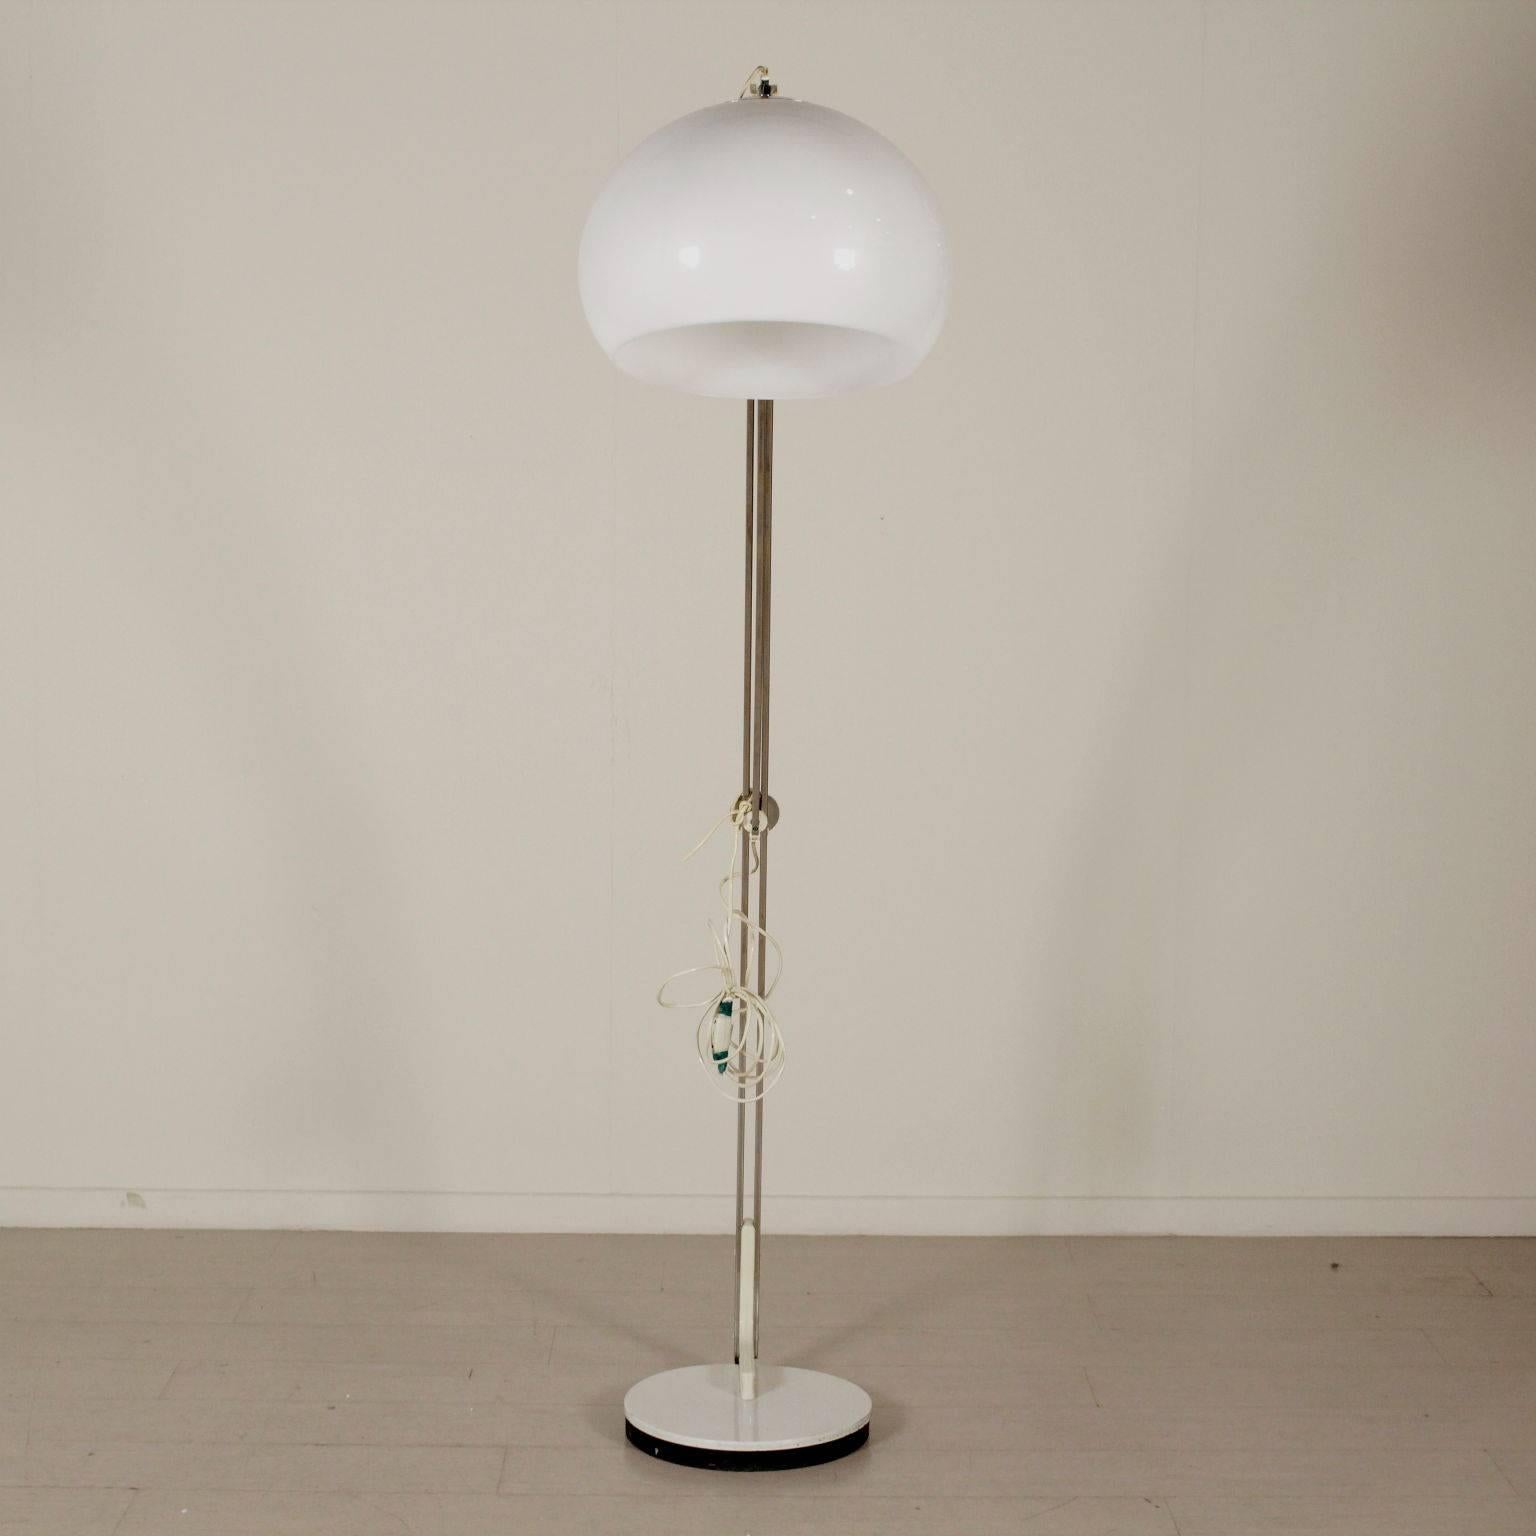 An extensible floor lamp, metal, chromed aluminium, plastic material diffuser. Manufactured in Italy, 1960s.